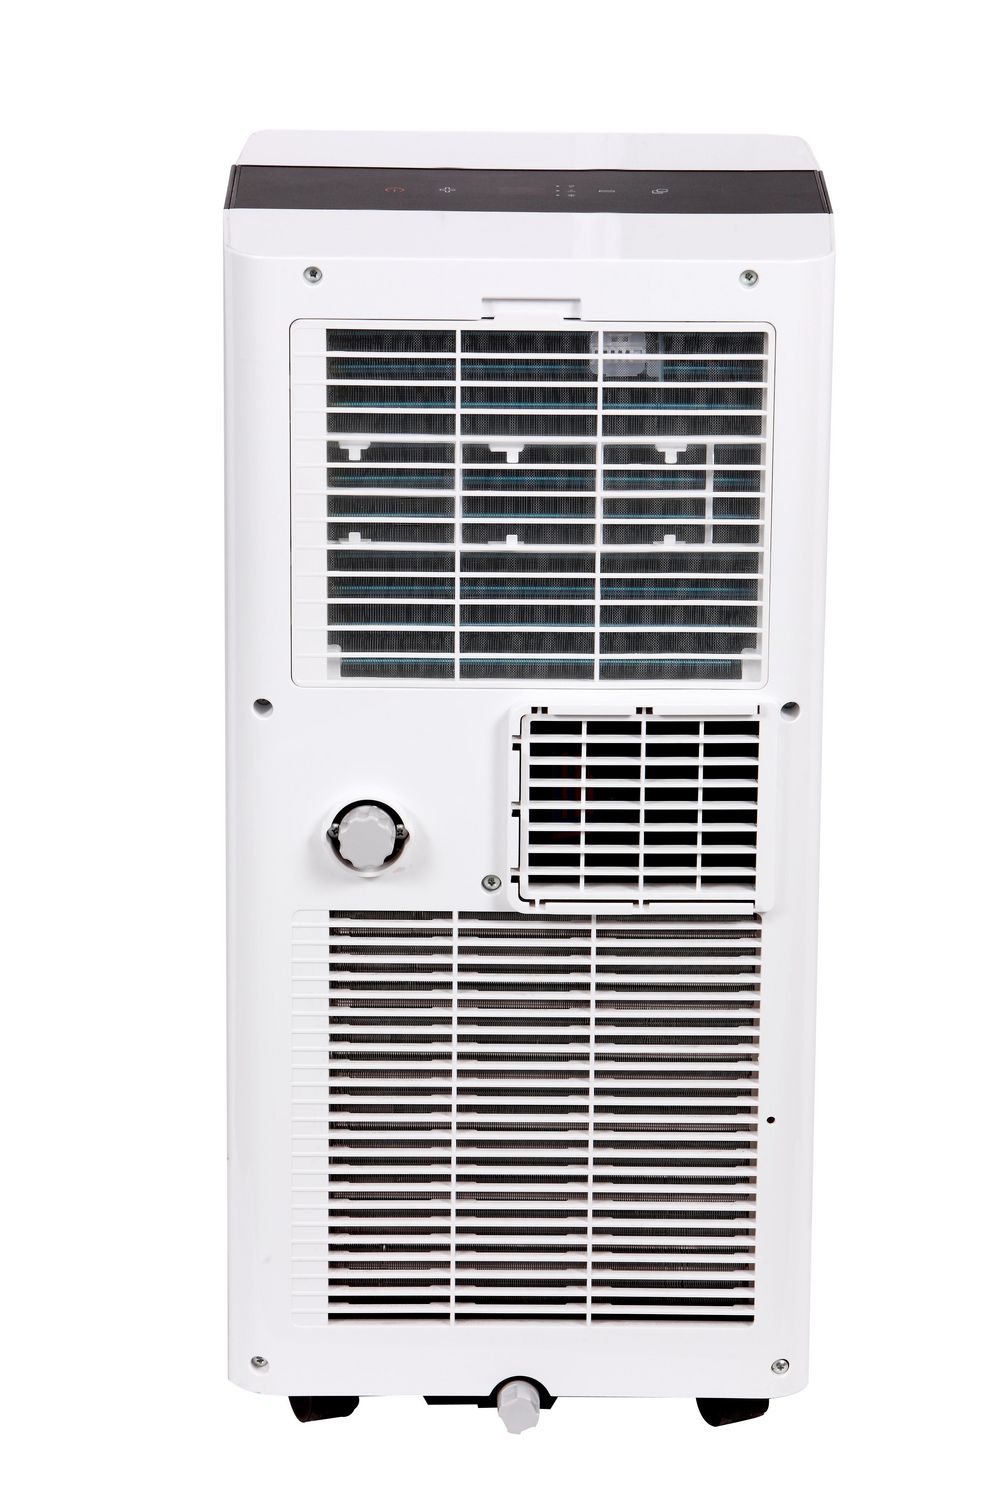 Midea 8,000 BTU 3-in-1 Portable Air Conditioner, Dehumidifier, Fan